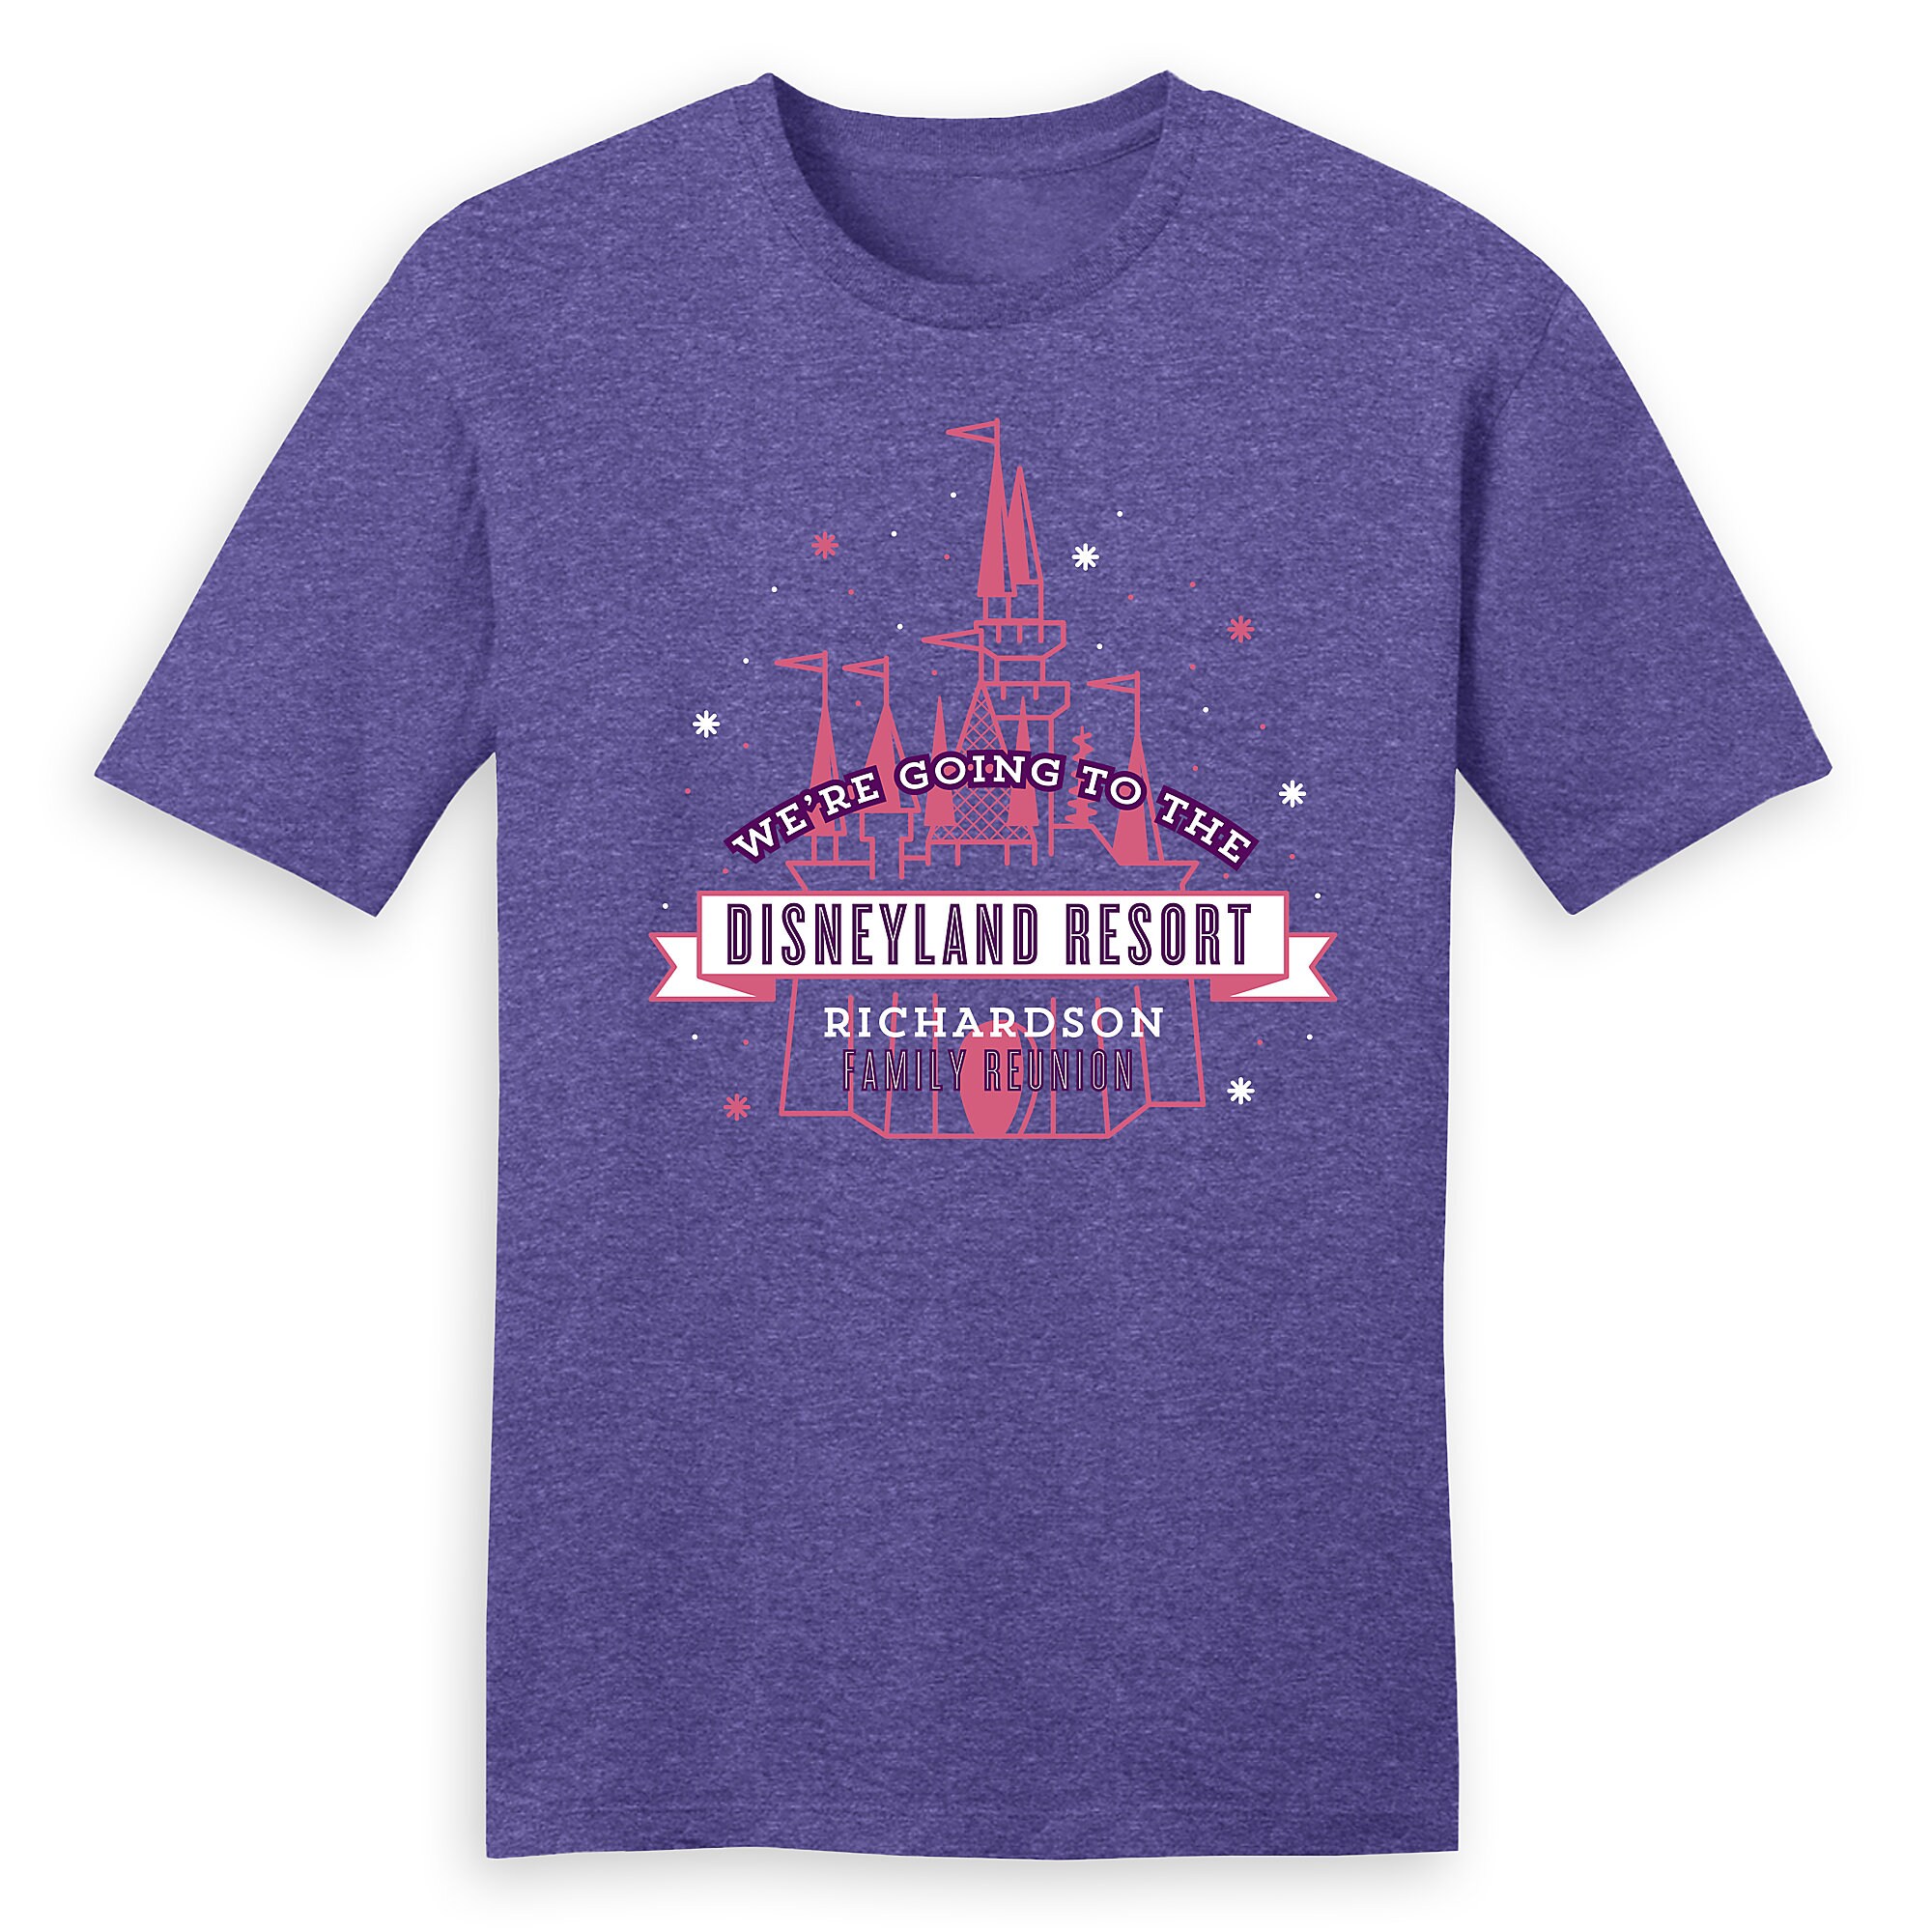 Adults' Sleeping Beauty Castle Family Reunion T-Shirt - Disneyland Resort - Customized